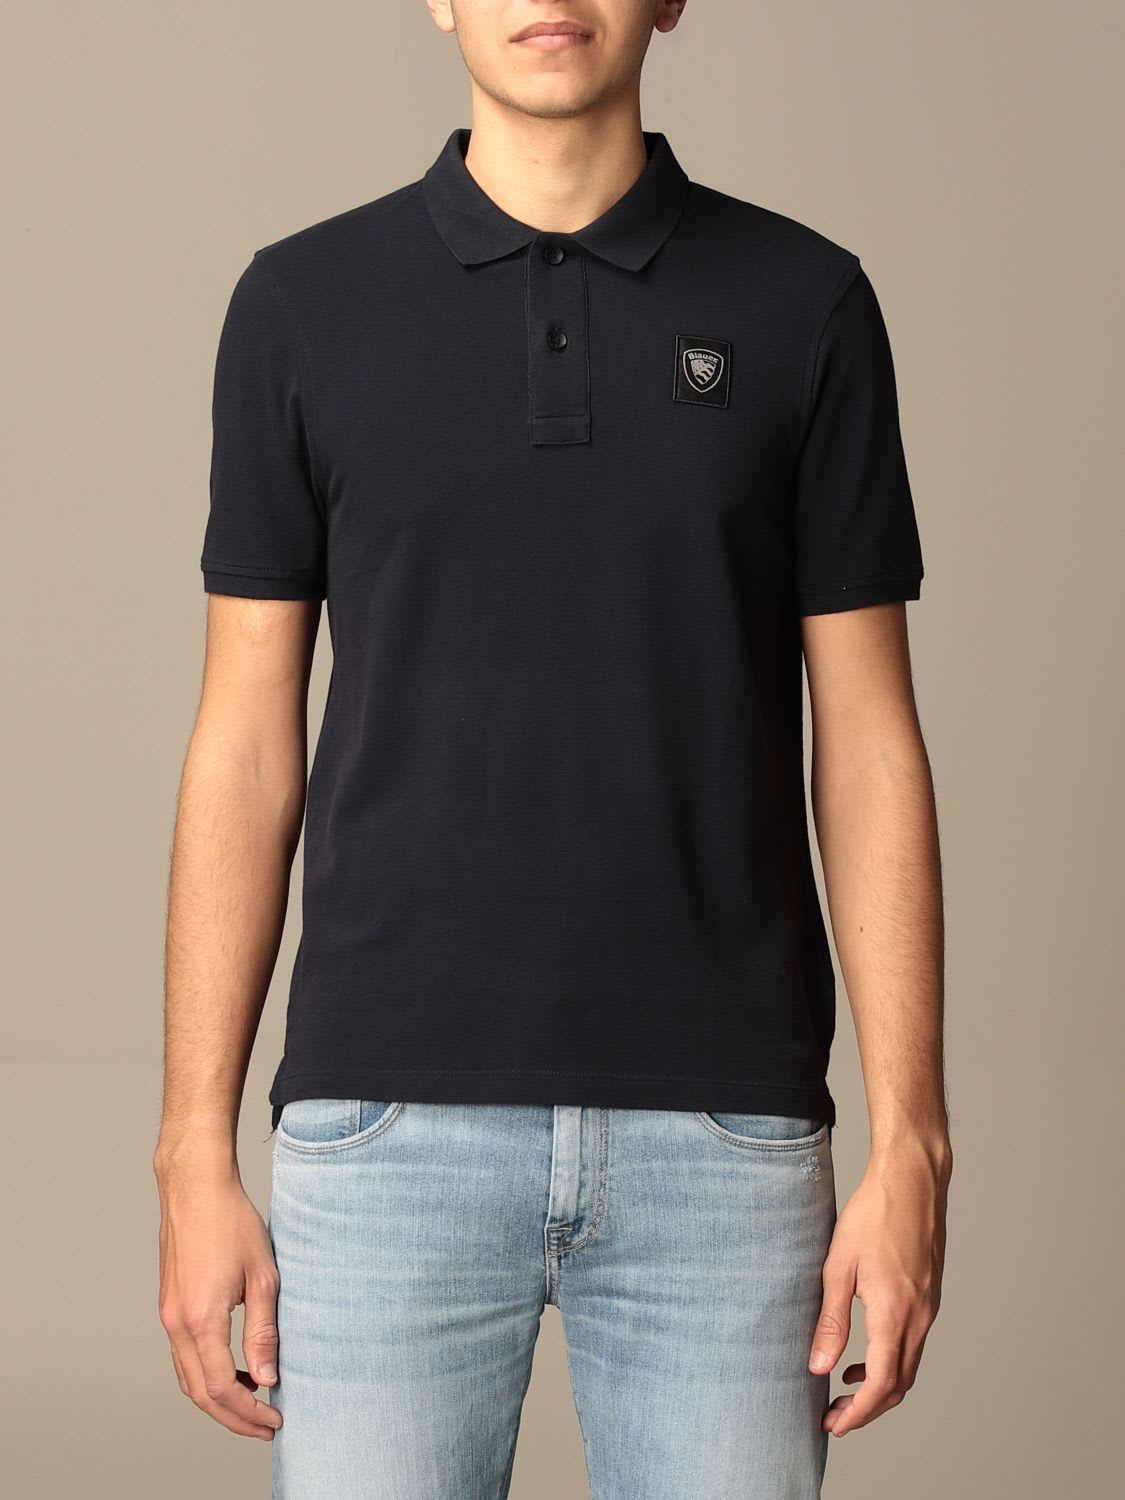 Blauer Polo Shirt Blauer Cotton Polo Shirt With Logo